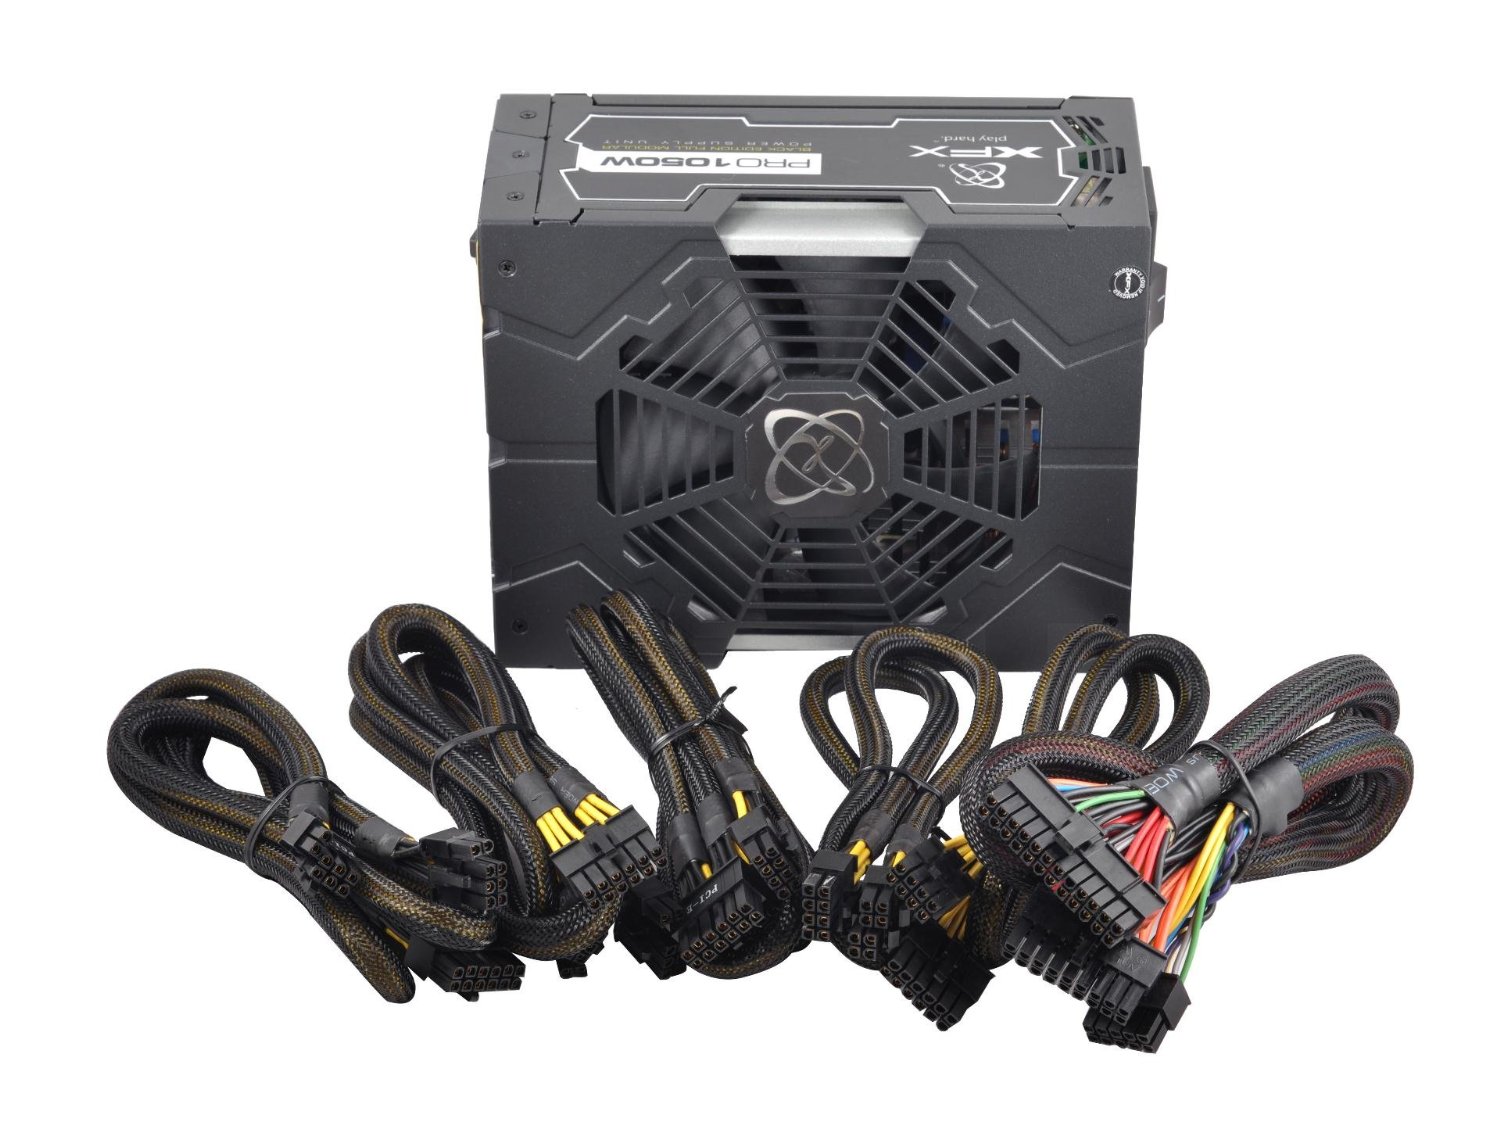 XFX Pro 1050W Black Edition Power Supply